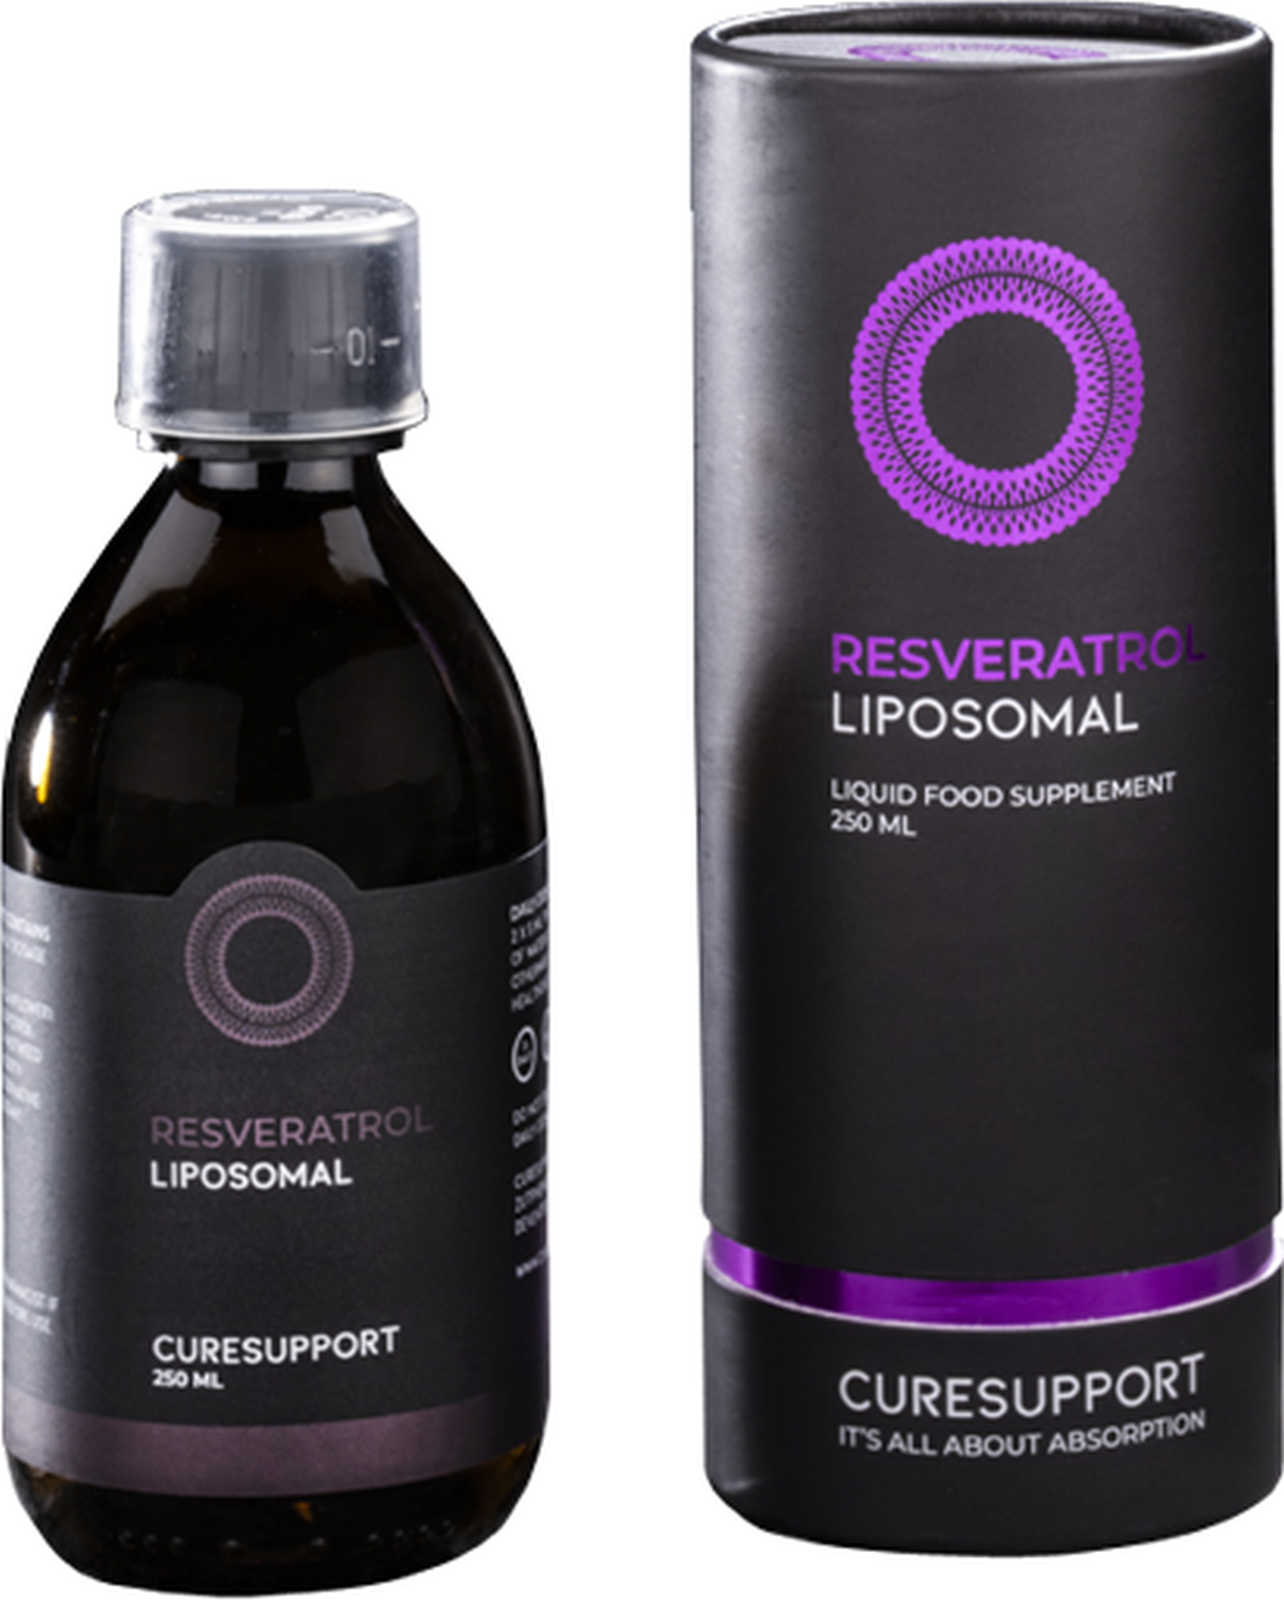 CureSupport Resveratrol 400 mg Liposomal